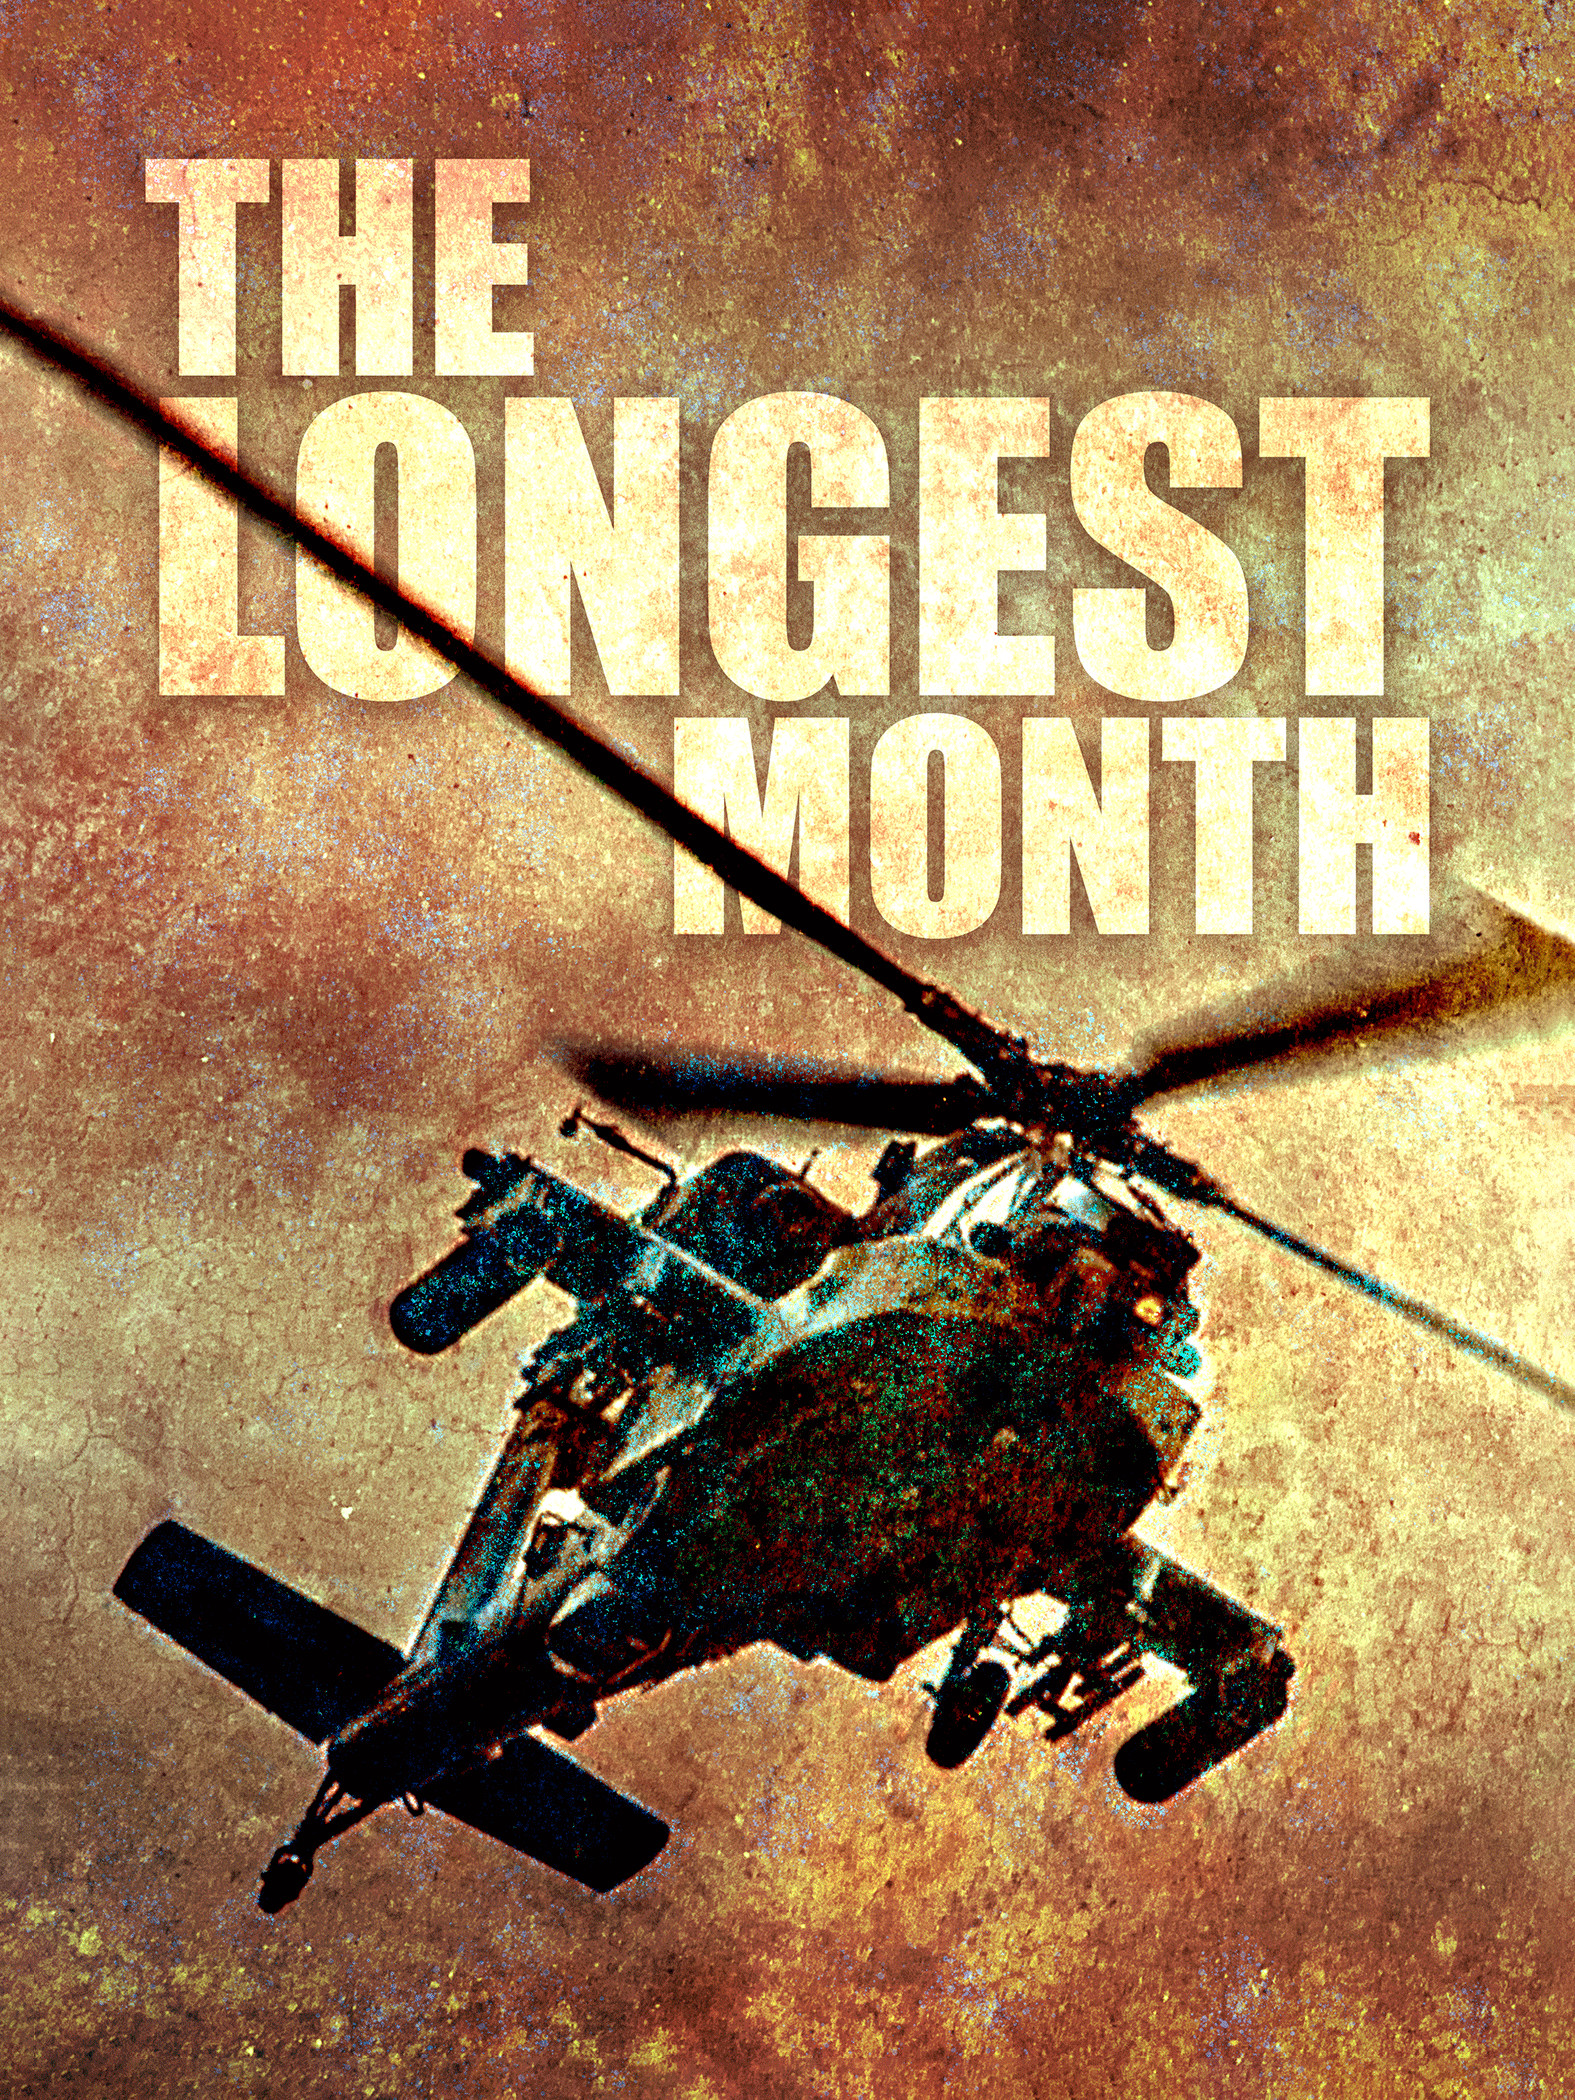 The Longest Month